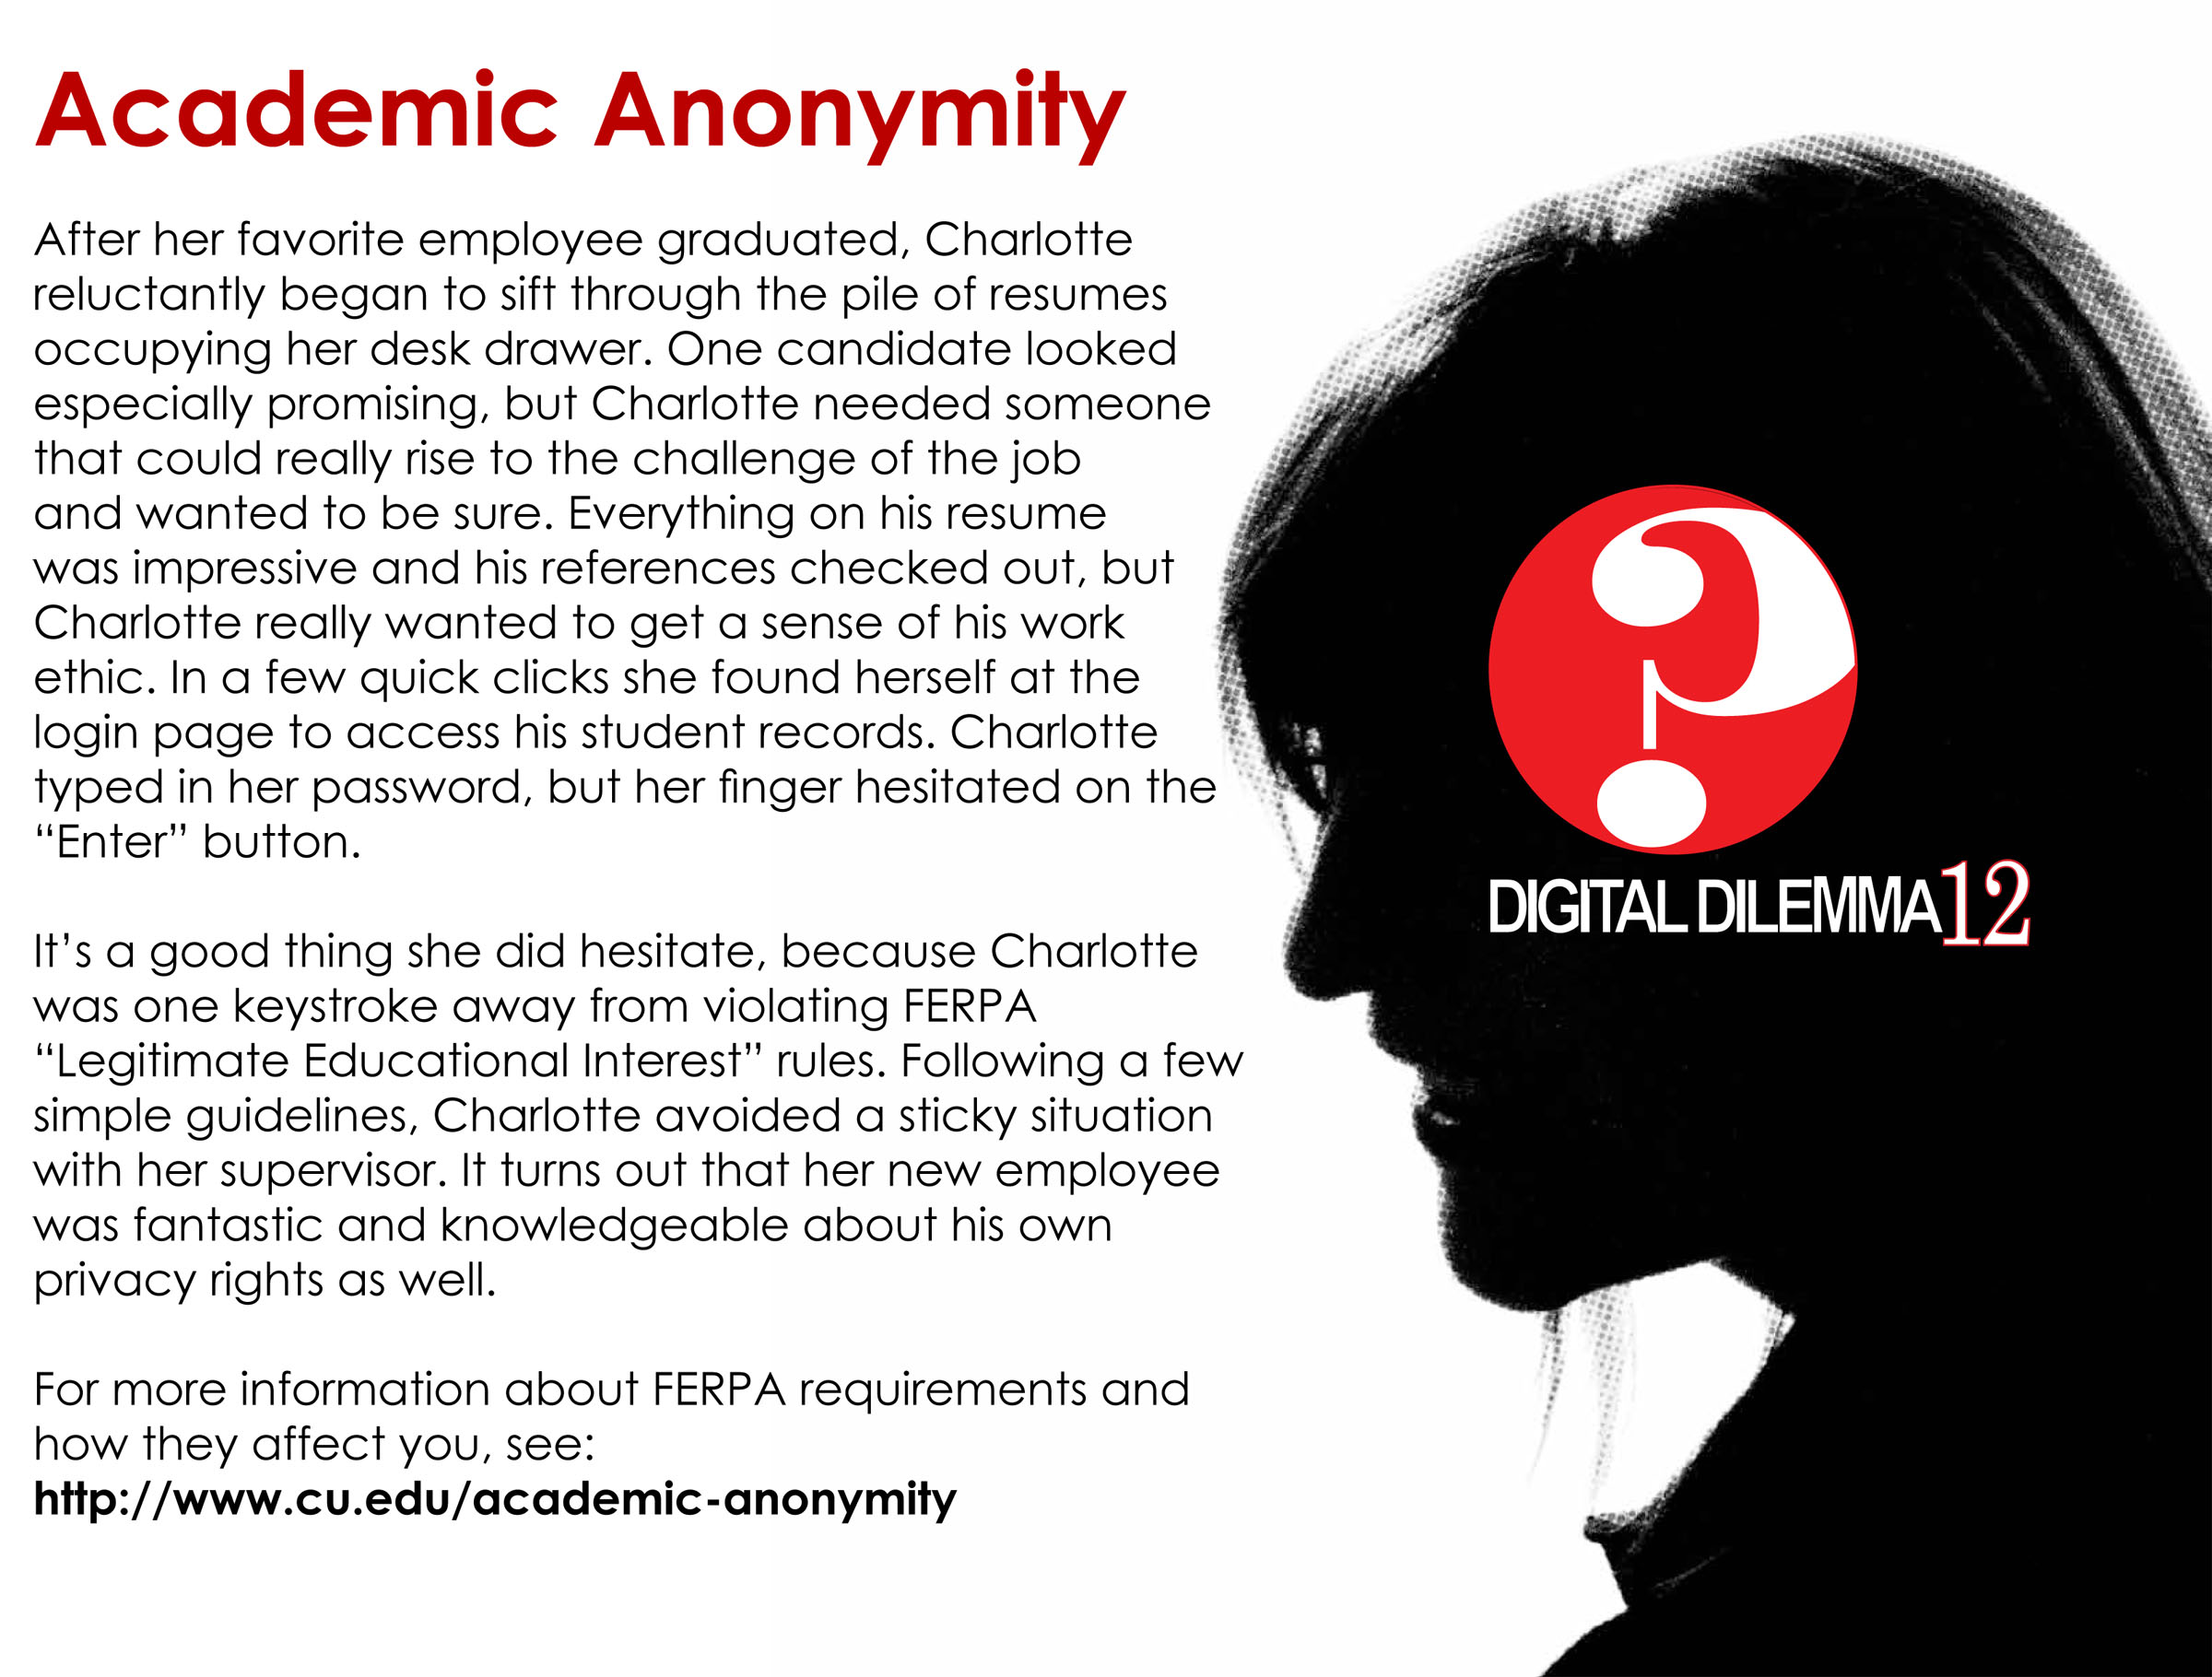 Academic Anonymity Card